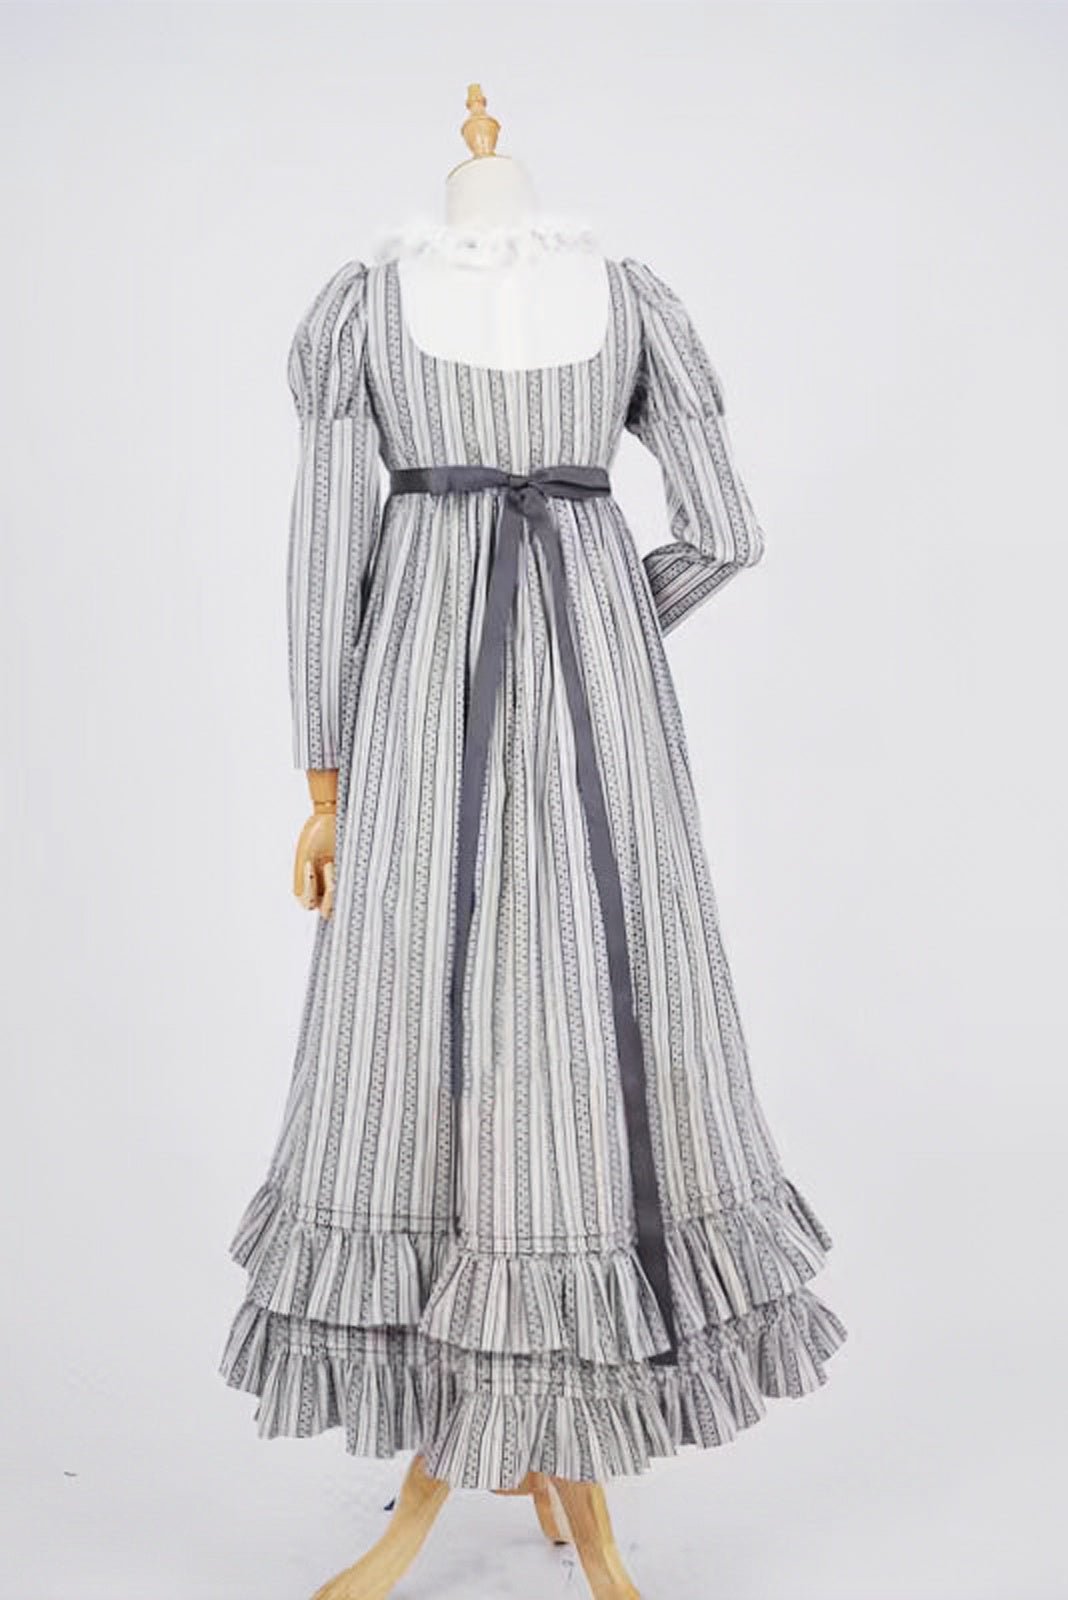 Bridgerton Inspired Regency Era High-necked Grey Striped Dress - Regency Era Ball Gown Plus Size - WonderlandByLilian